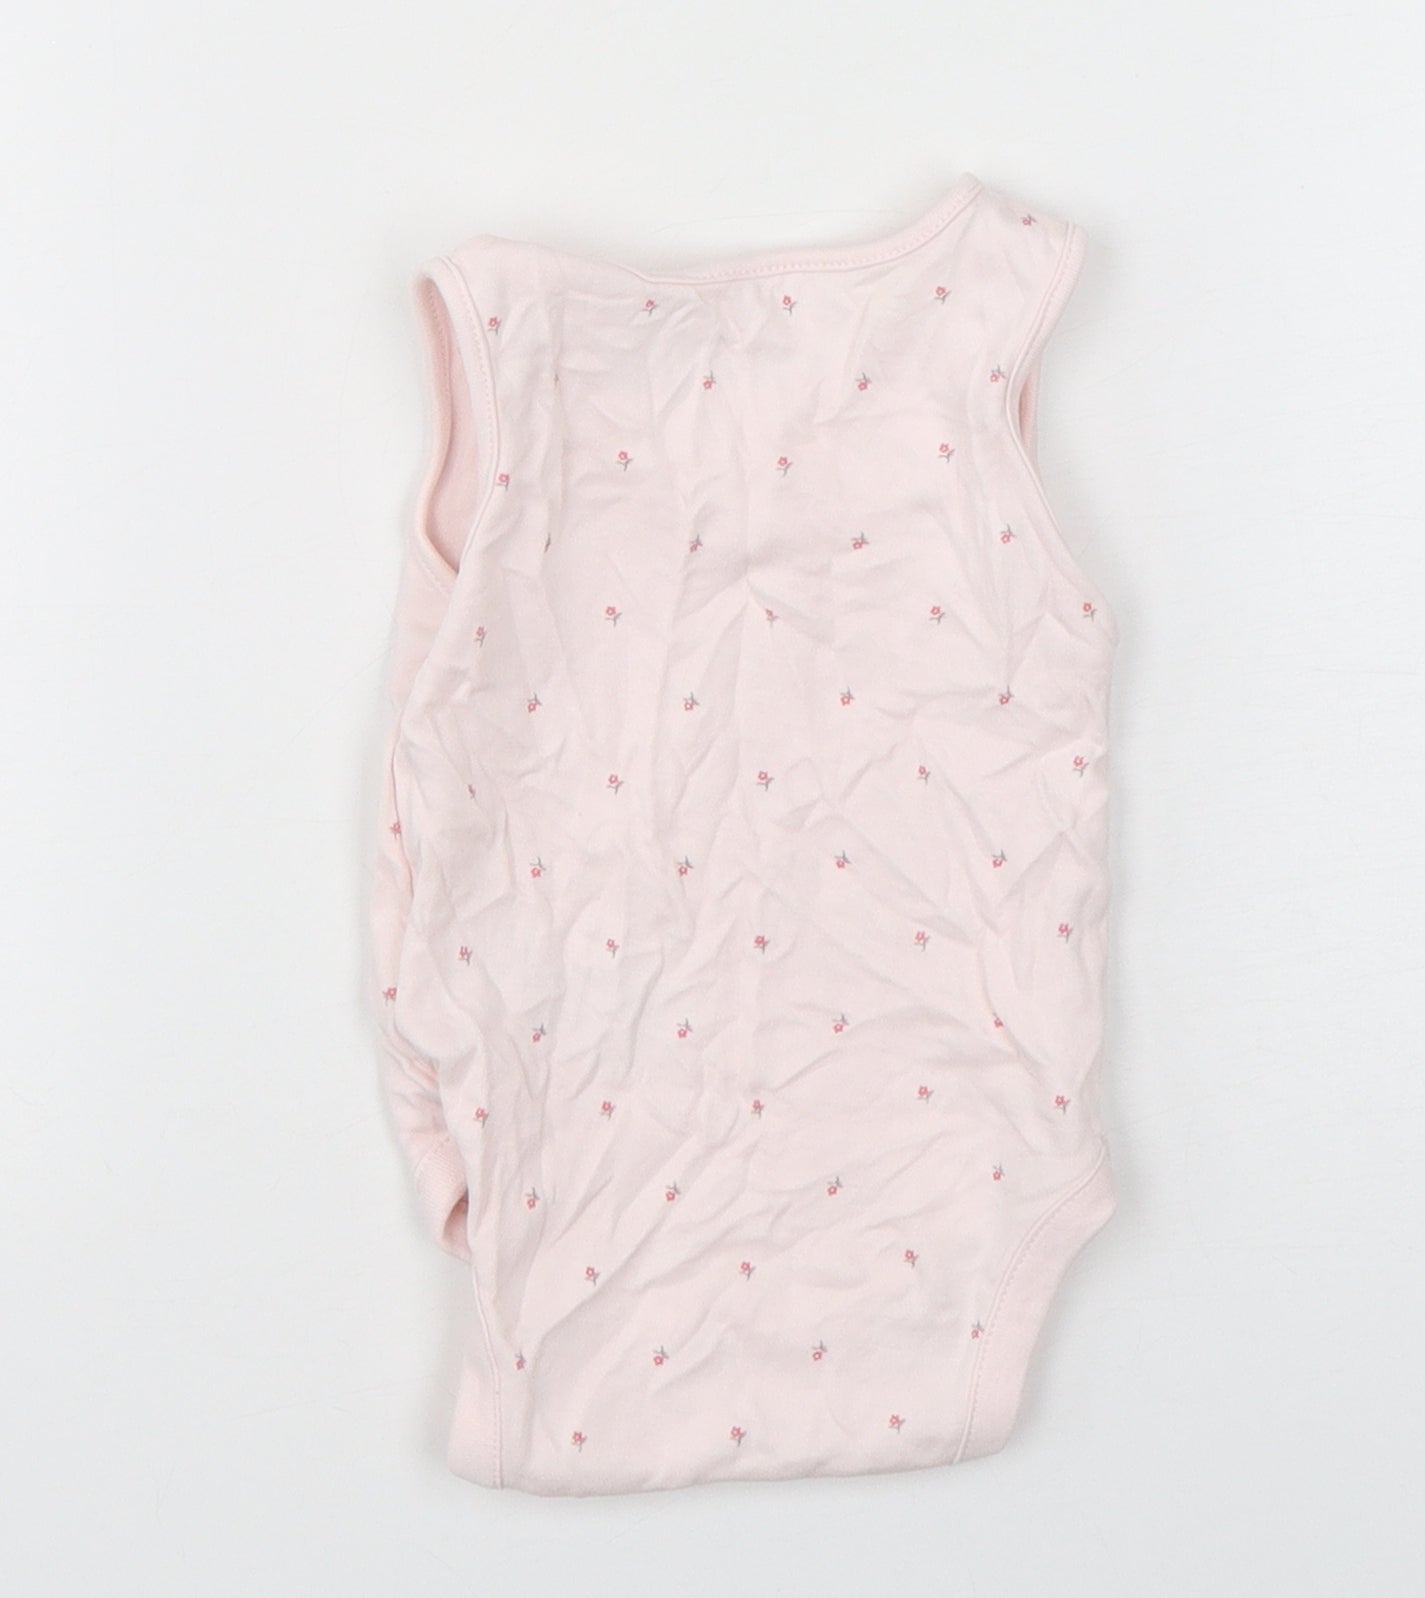 NEXT Girls Pink Floral Cotton Babygrow One-Piece Size 3-6 Months  Snap